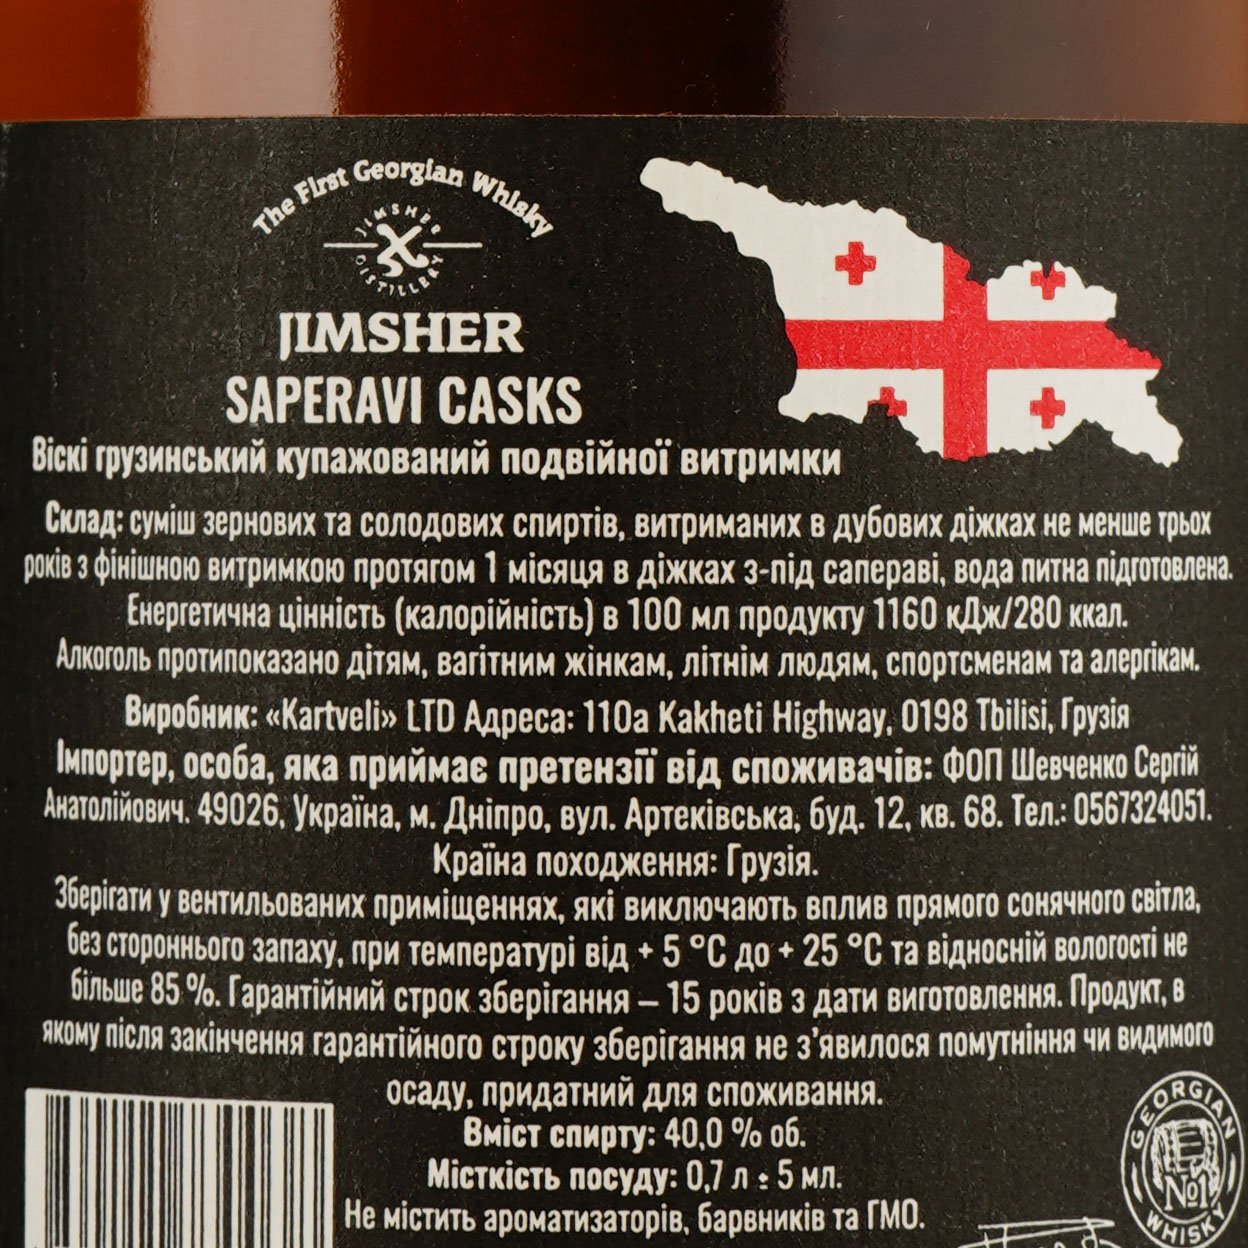 Виски Jimsher Saperavi Casks Blended Georgian Whisky, 40%, 0.7 л - фото 3